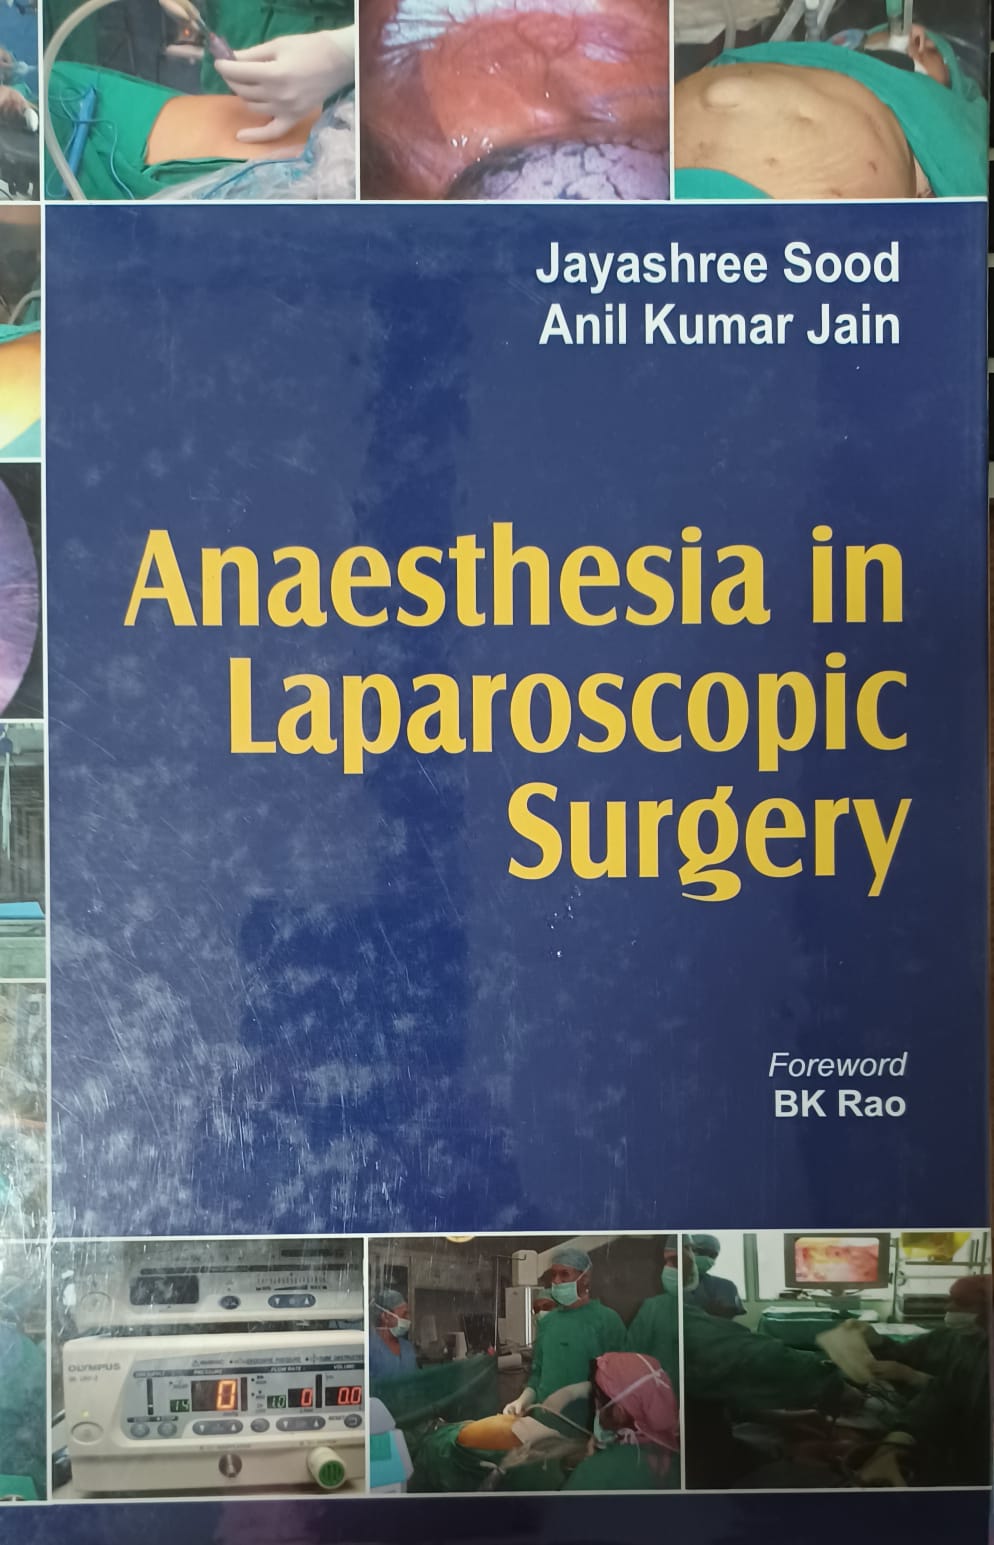 Anaesthesia in laparoscopic surgery